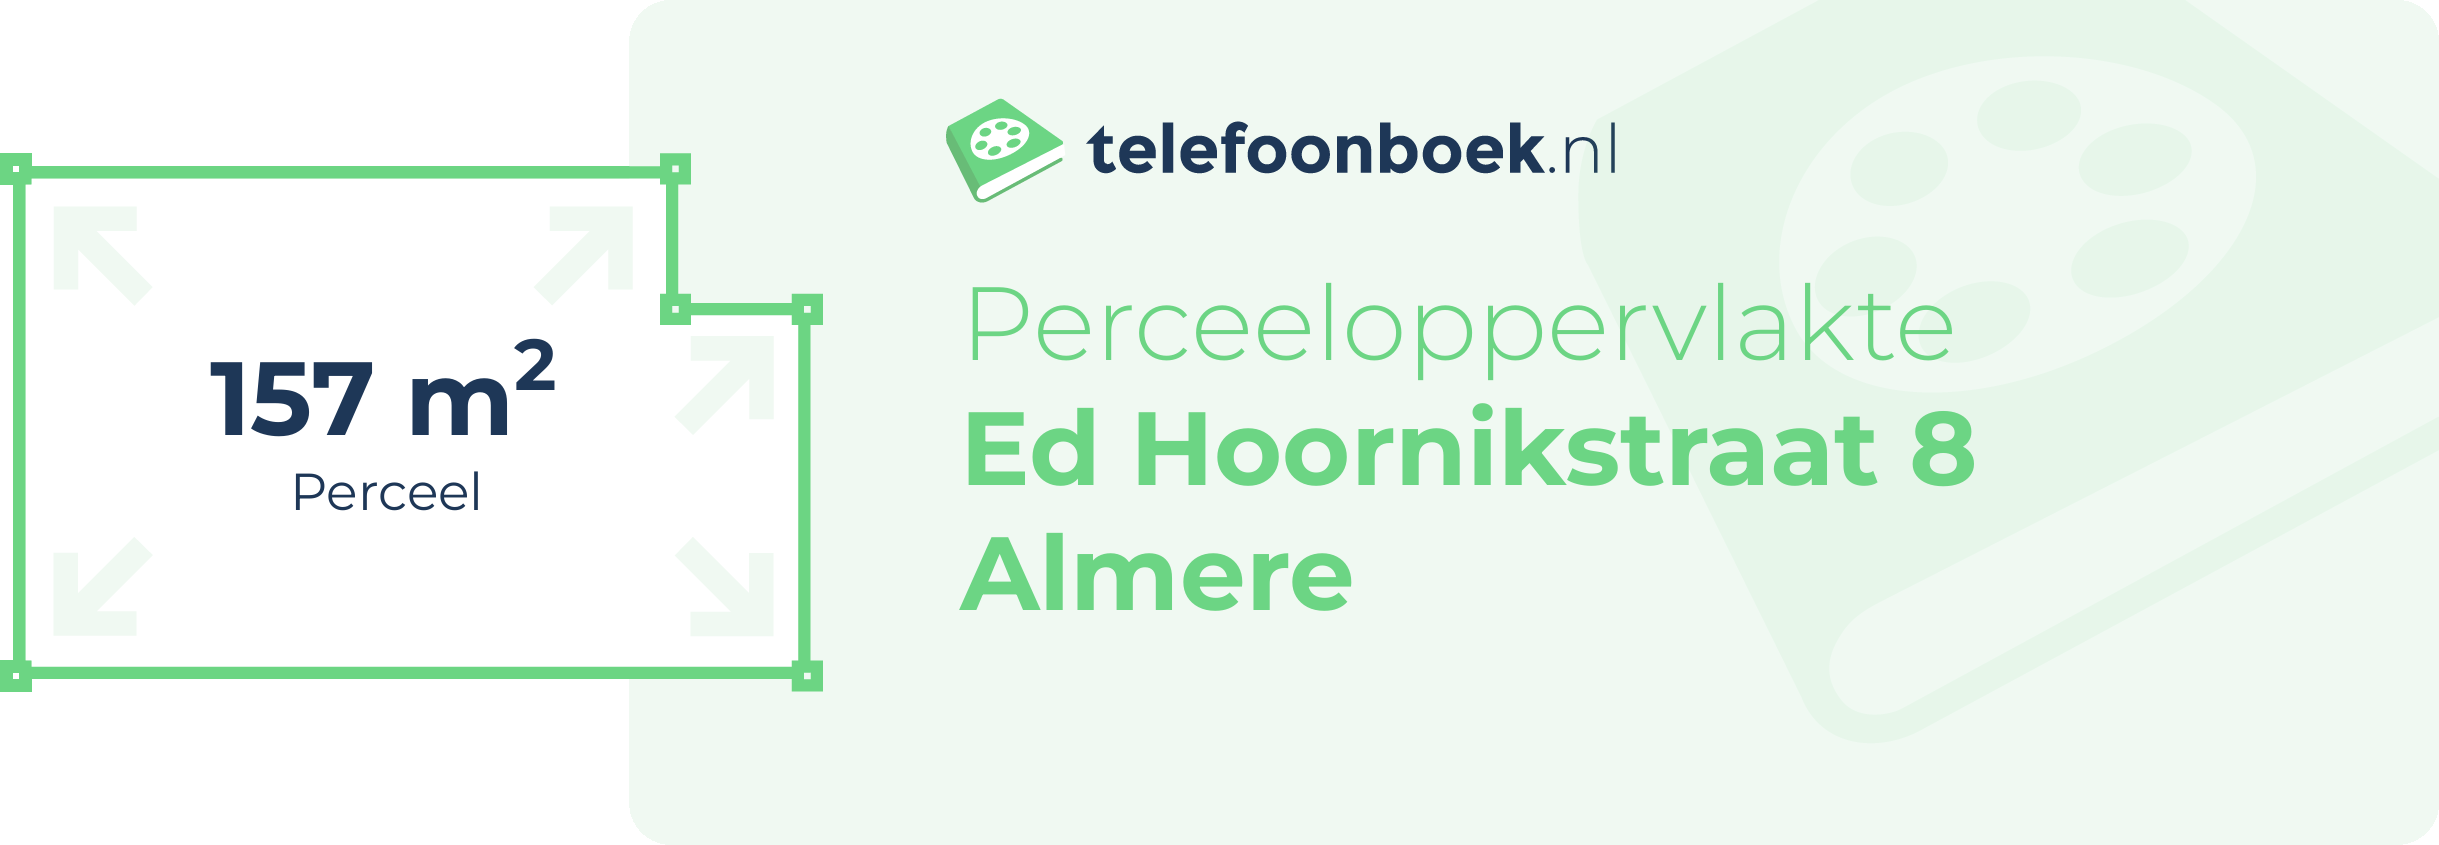 Perceeloppervlakte Ed Hoornikstraat 8 Almere